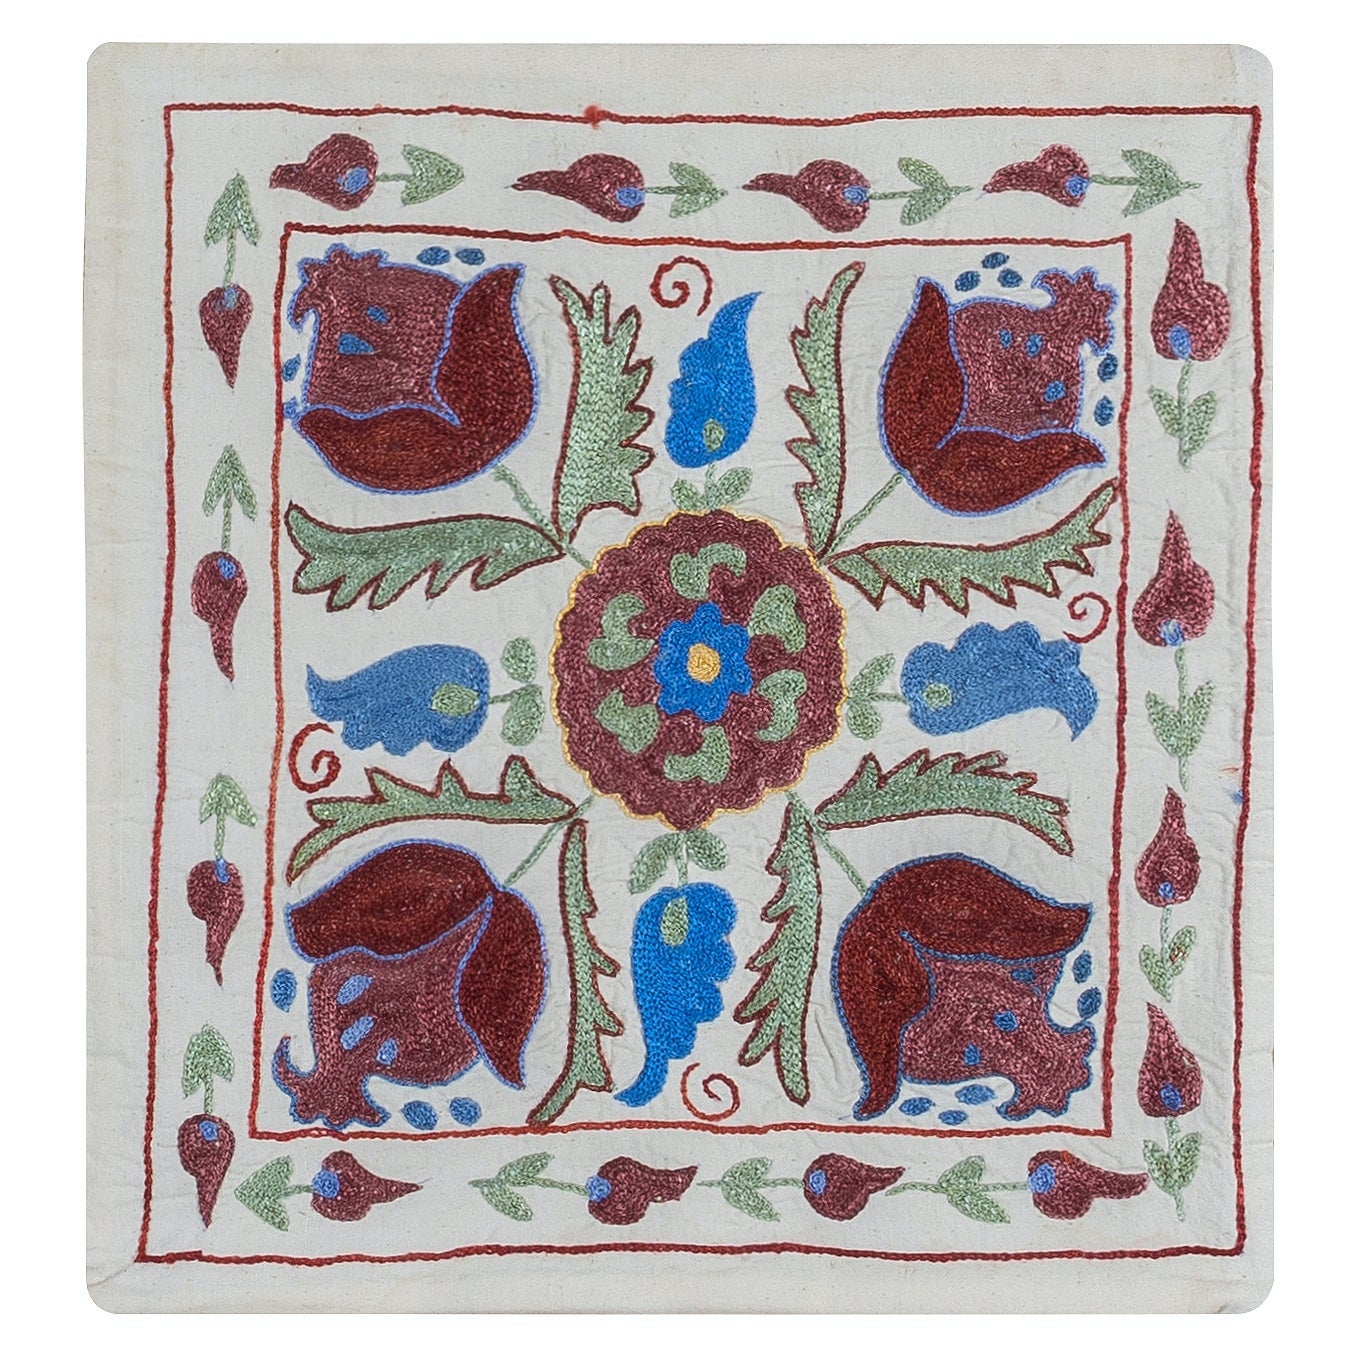 Embroidery Suzani Textile Lace Pillow Cover, Floral Uzbek Throw Pillow For Sale